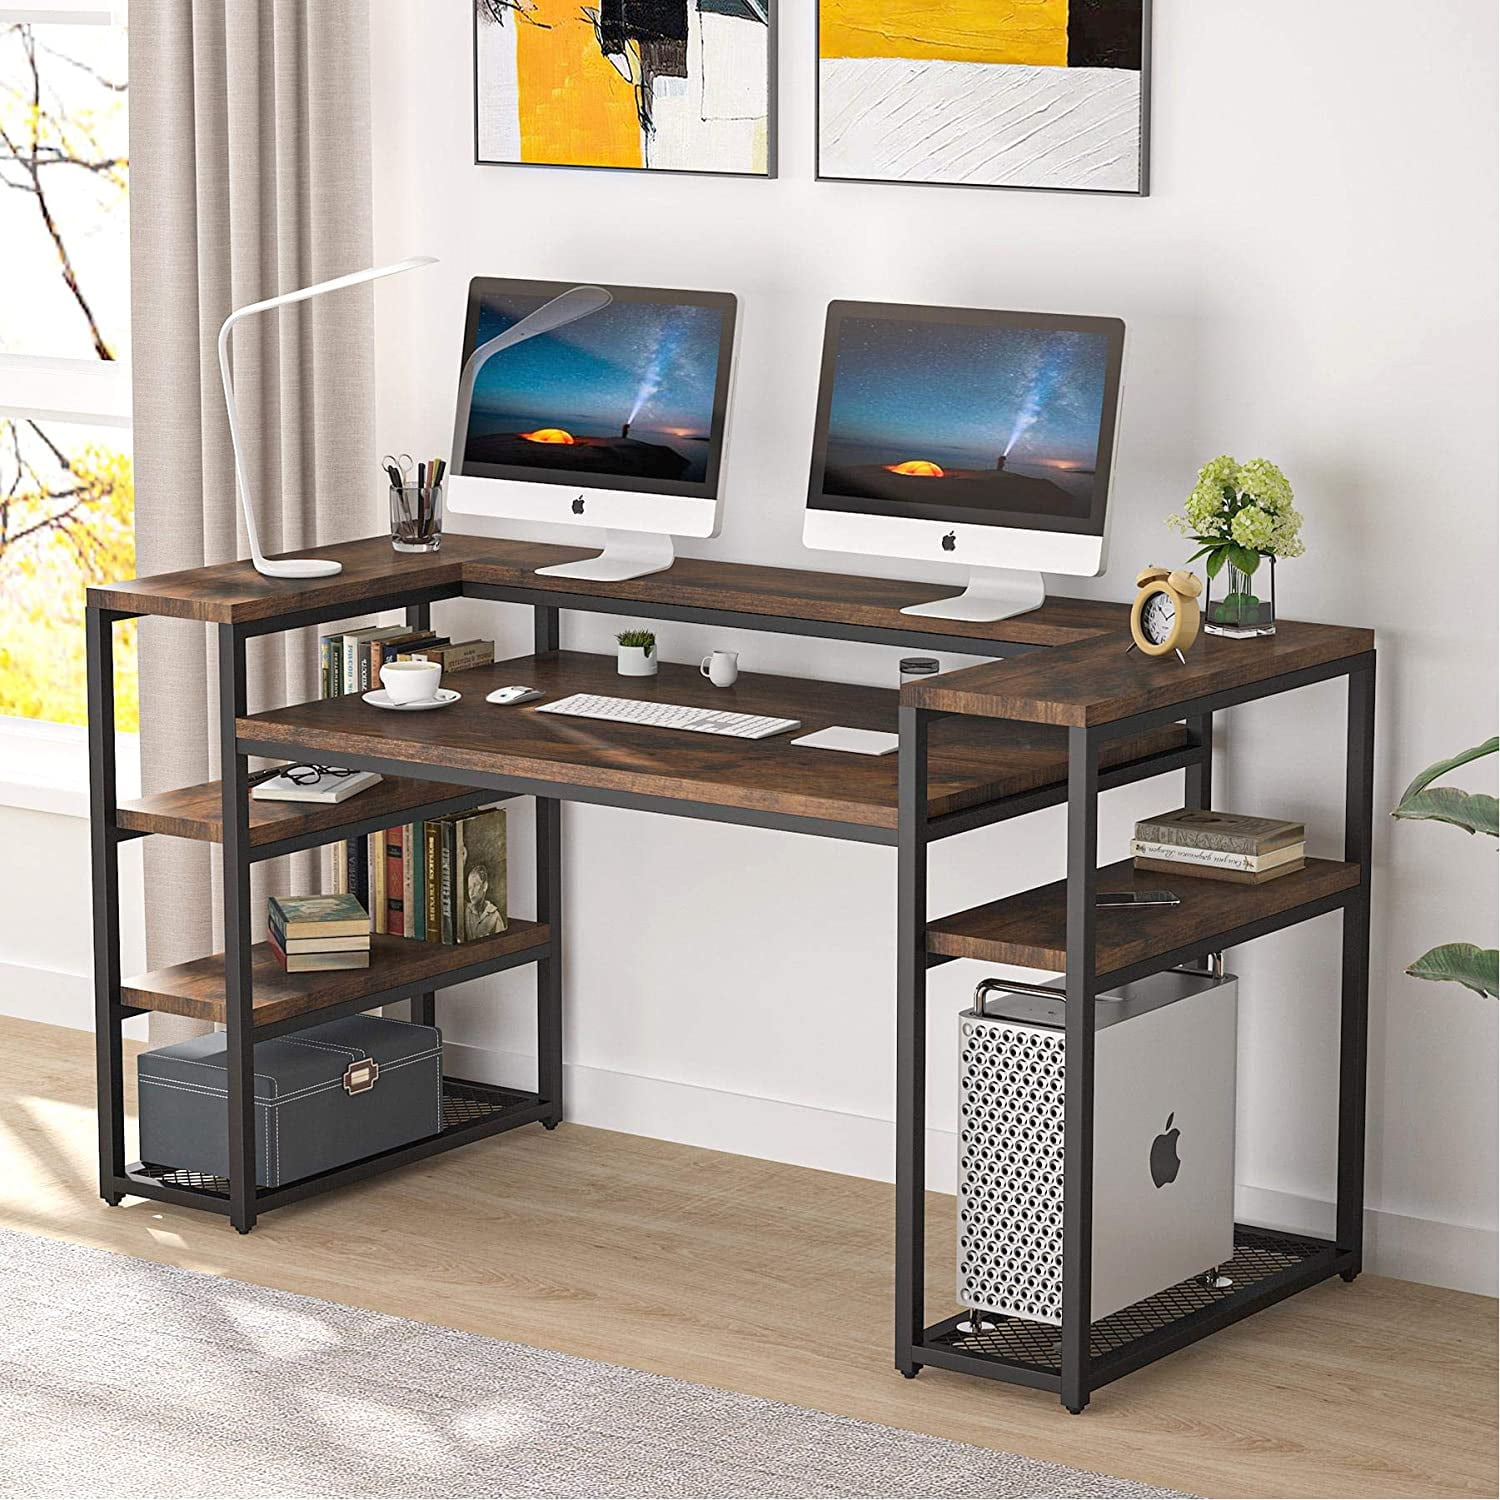 Computer desk with storage